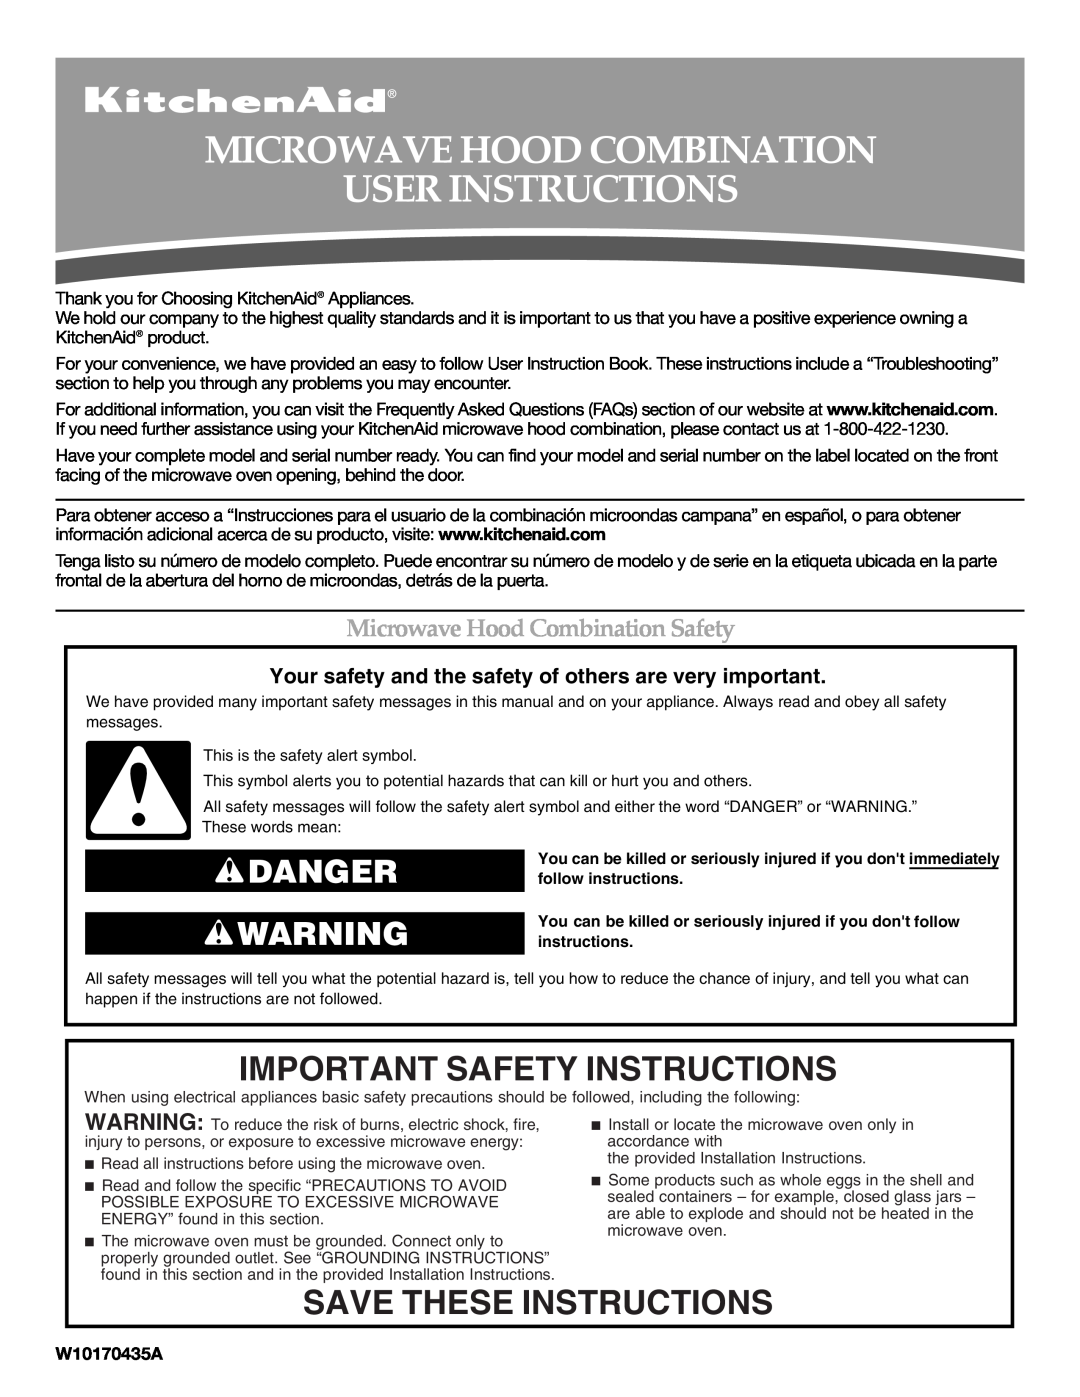 KitchenAid KHMS1850SBL important safety instructions Important Safety Instructions, Save These Instructions, W10170435A 